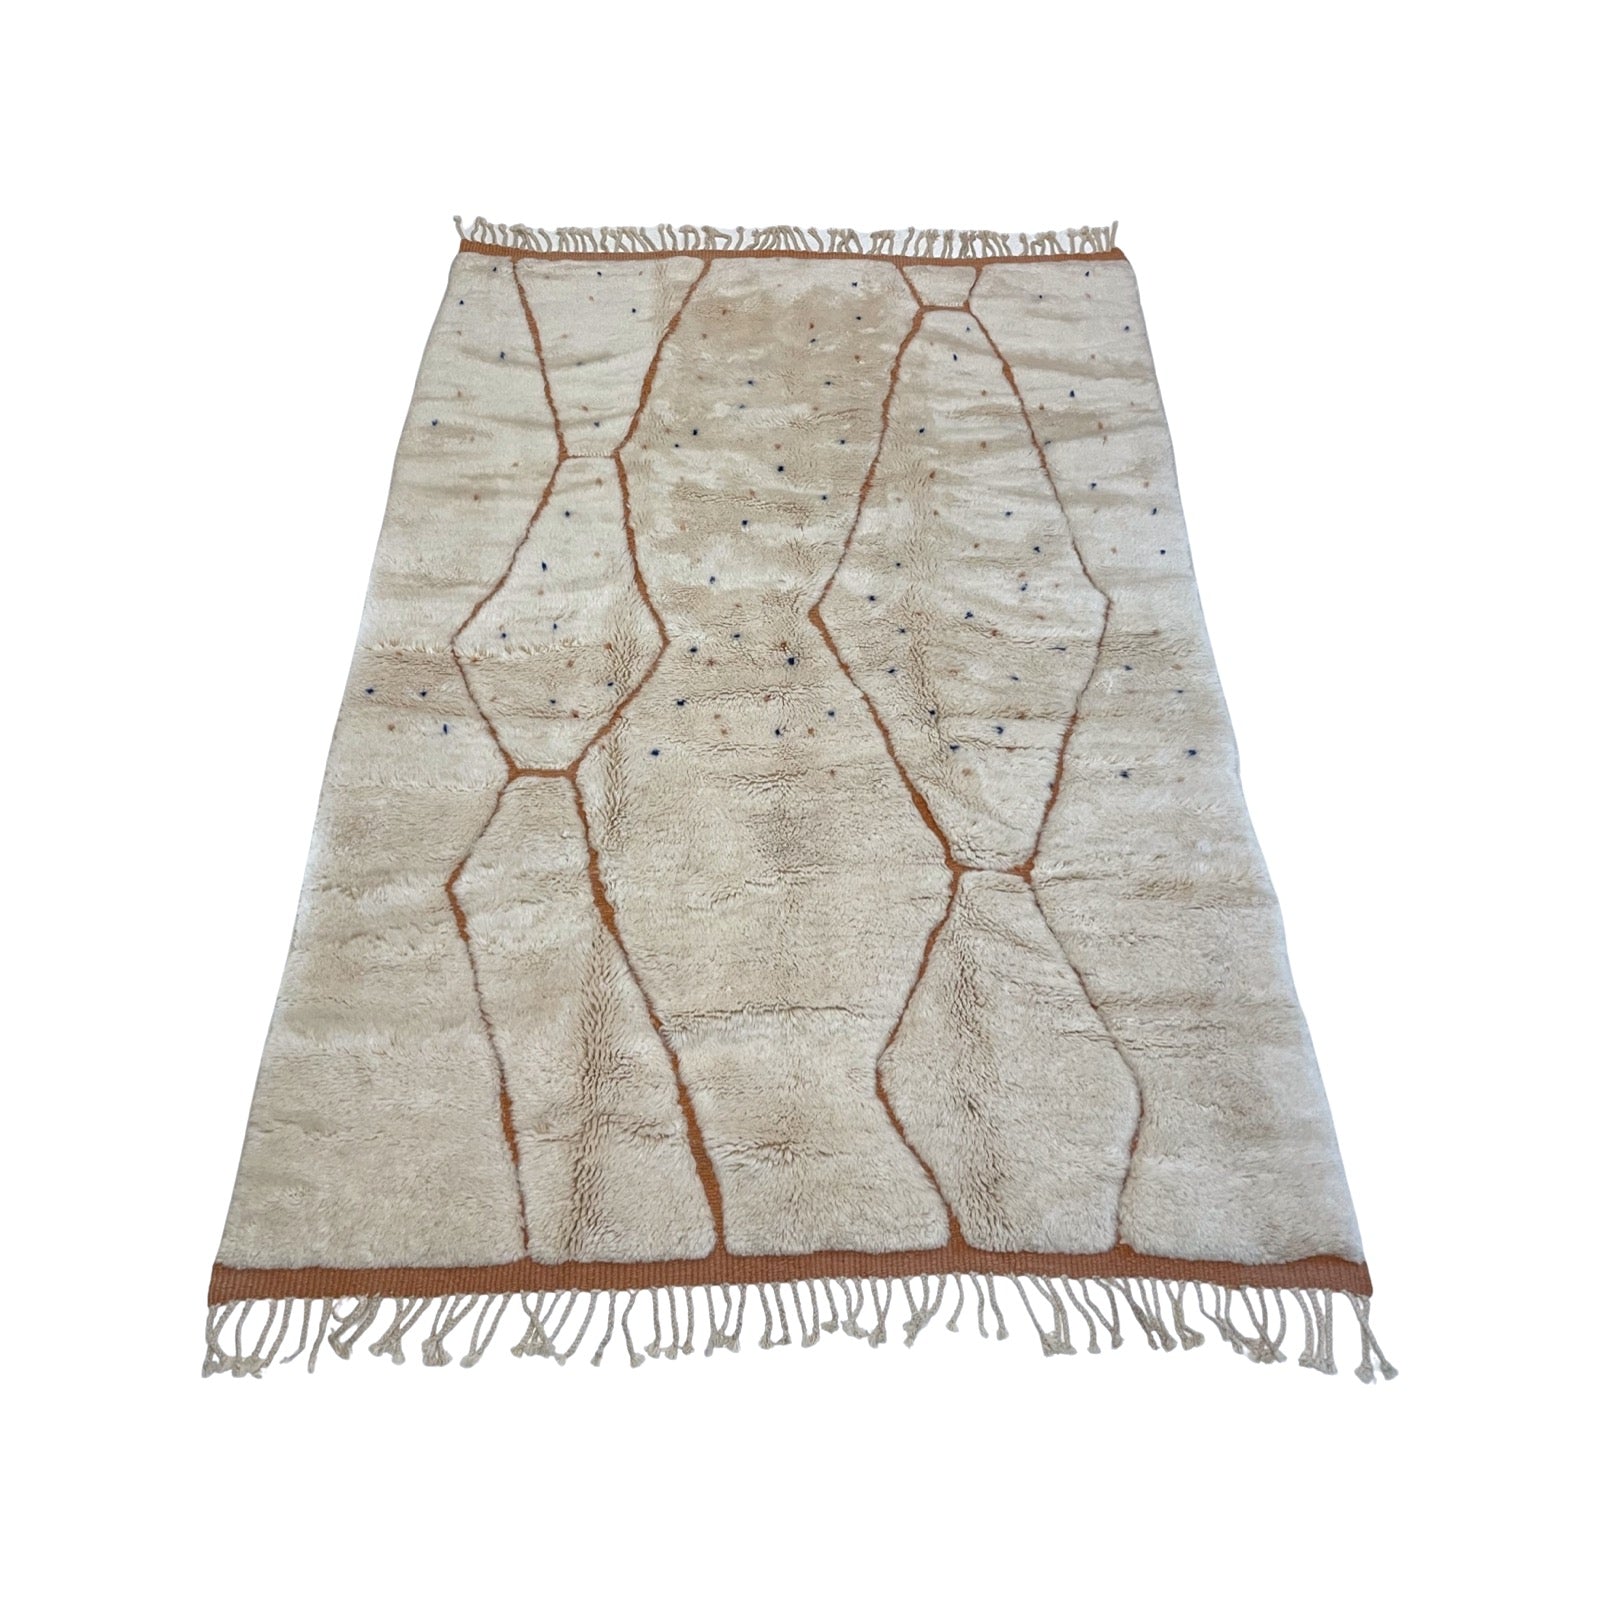 White and gold Moroccan bedroom rug - Kantara | Moroccan Rugs